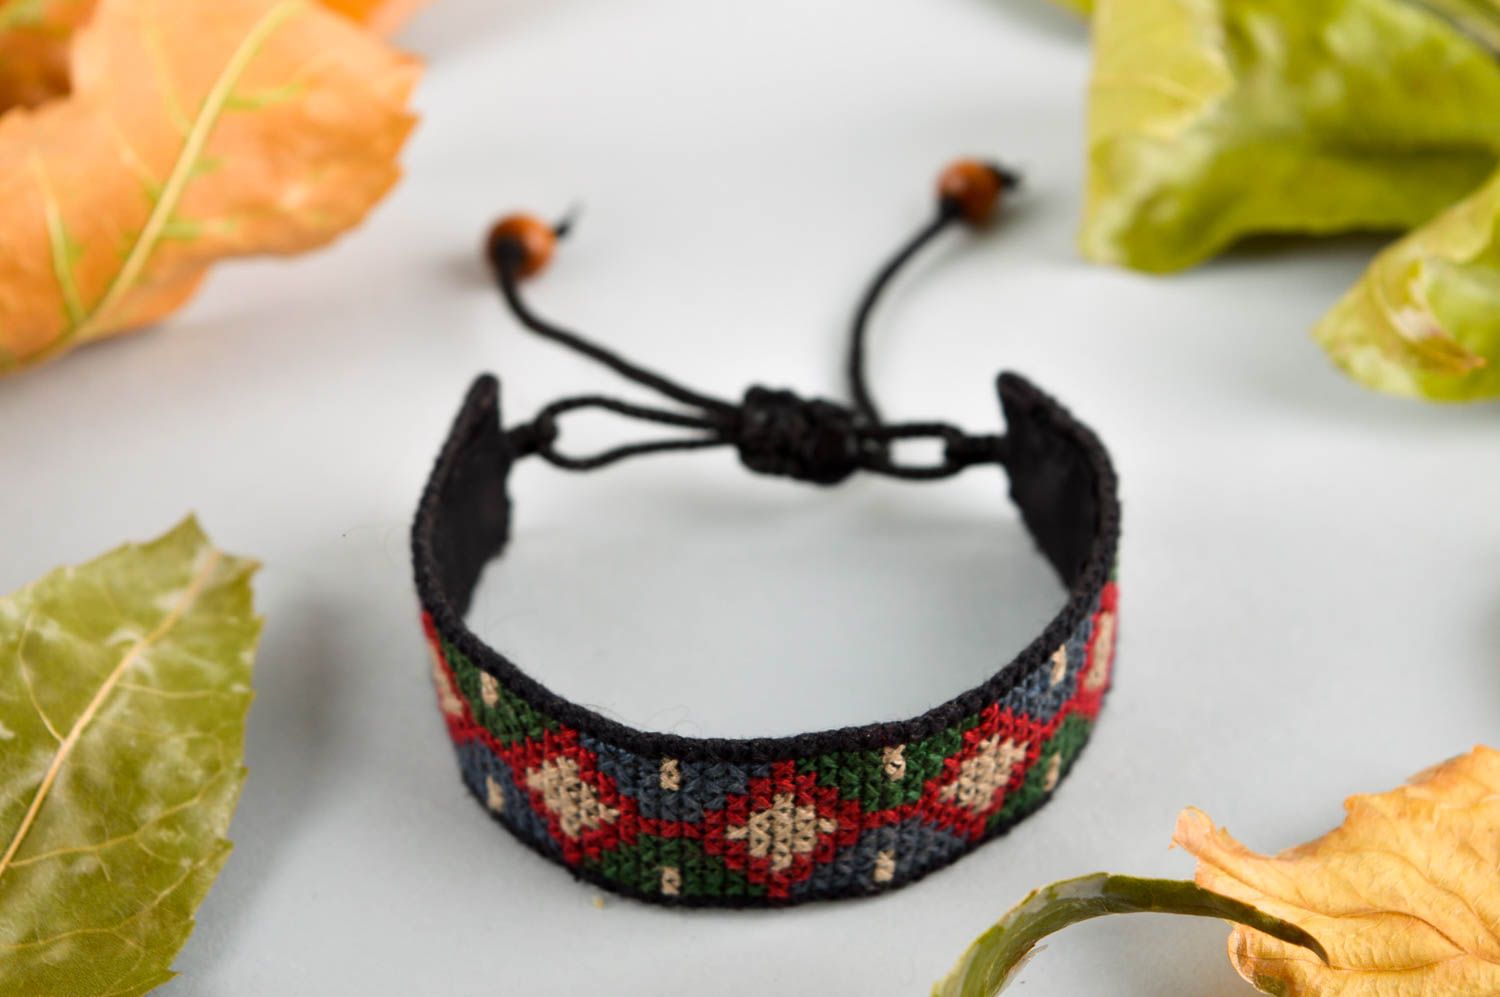 Handmade textile bracelet designs modern embroidery costume jewelry gift ideas photo 1